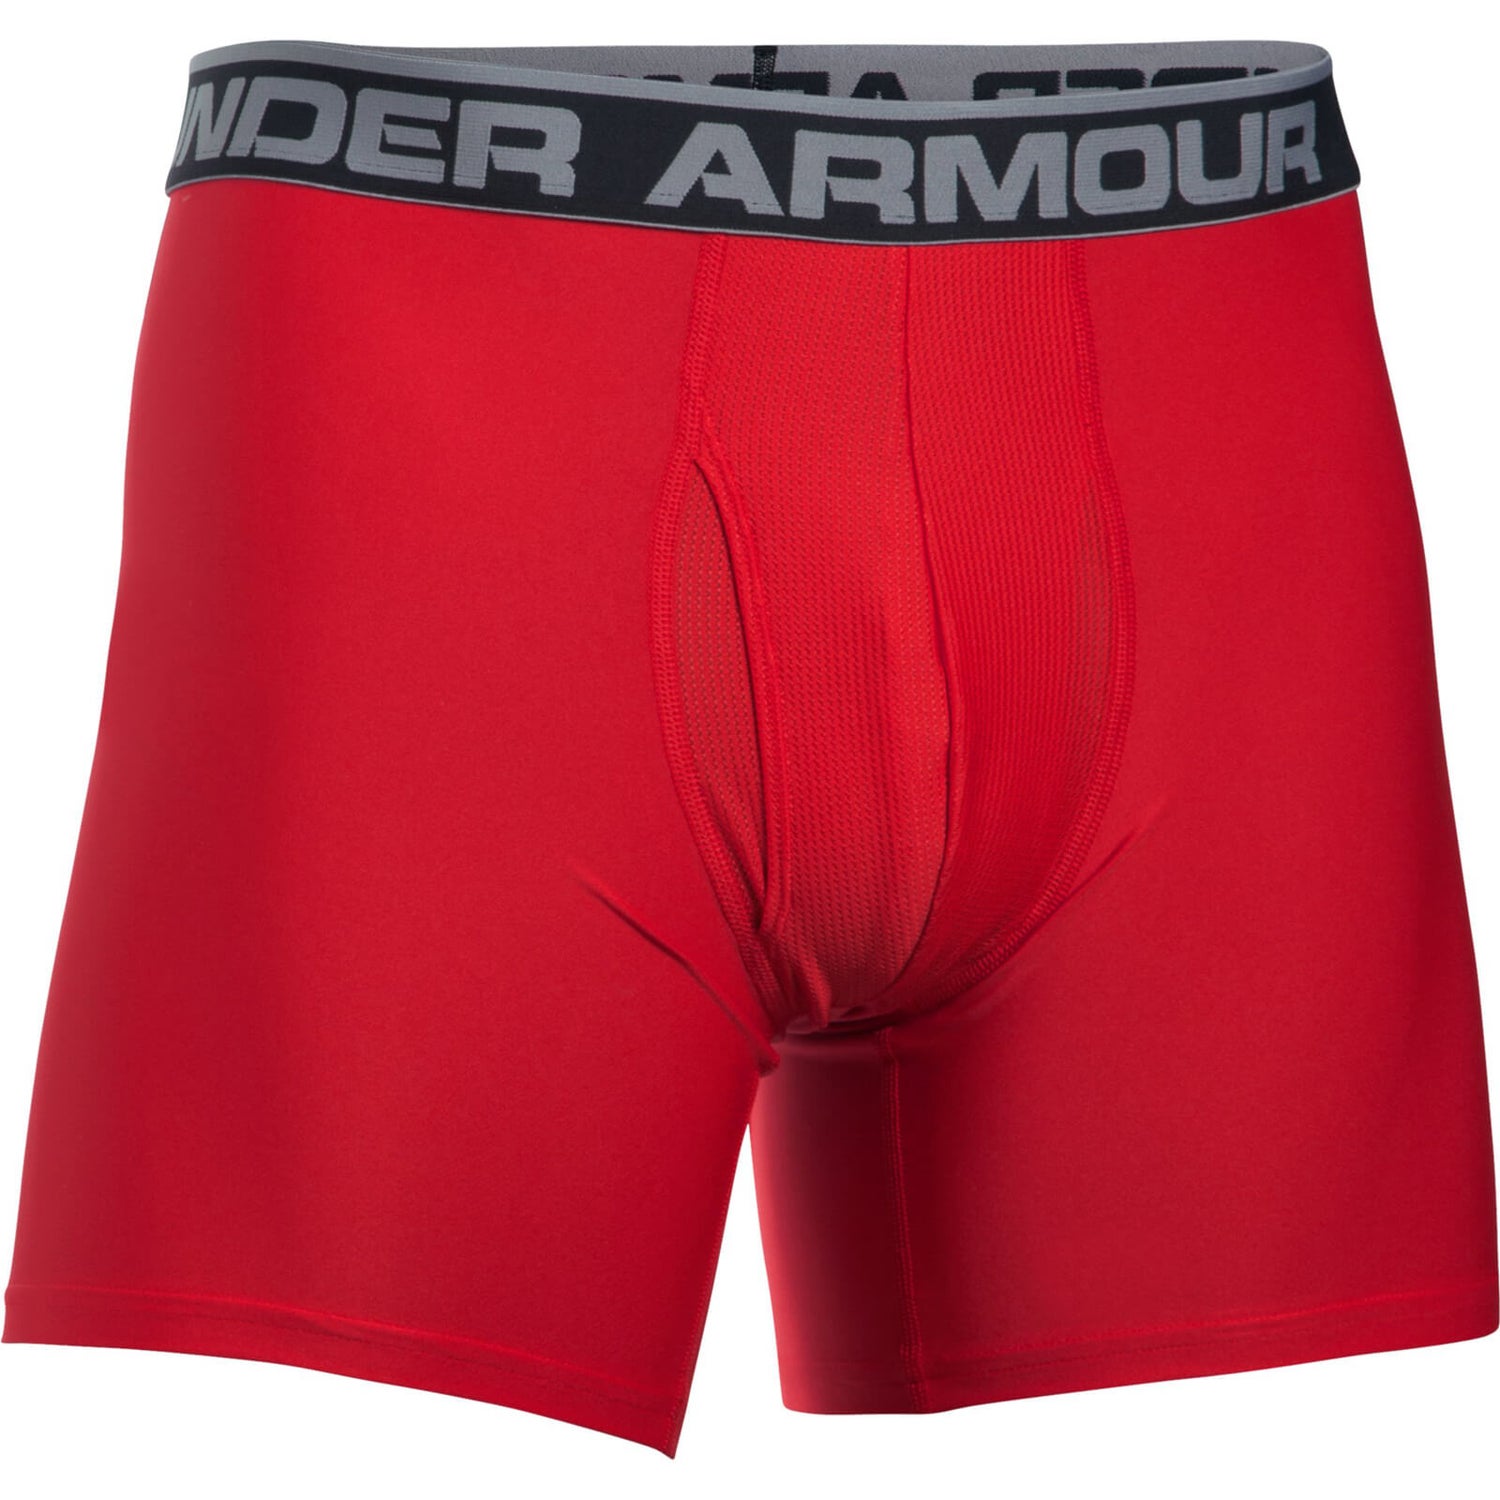 Under Armour Men's Original Series 6 Inch Boxerjock - Red | TheHut.com